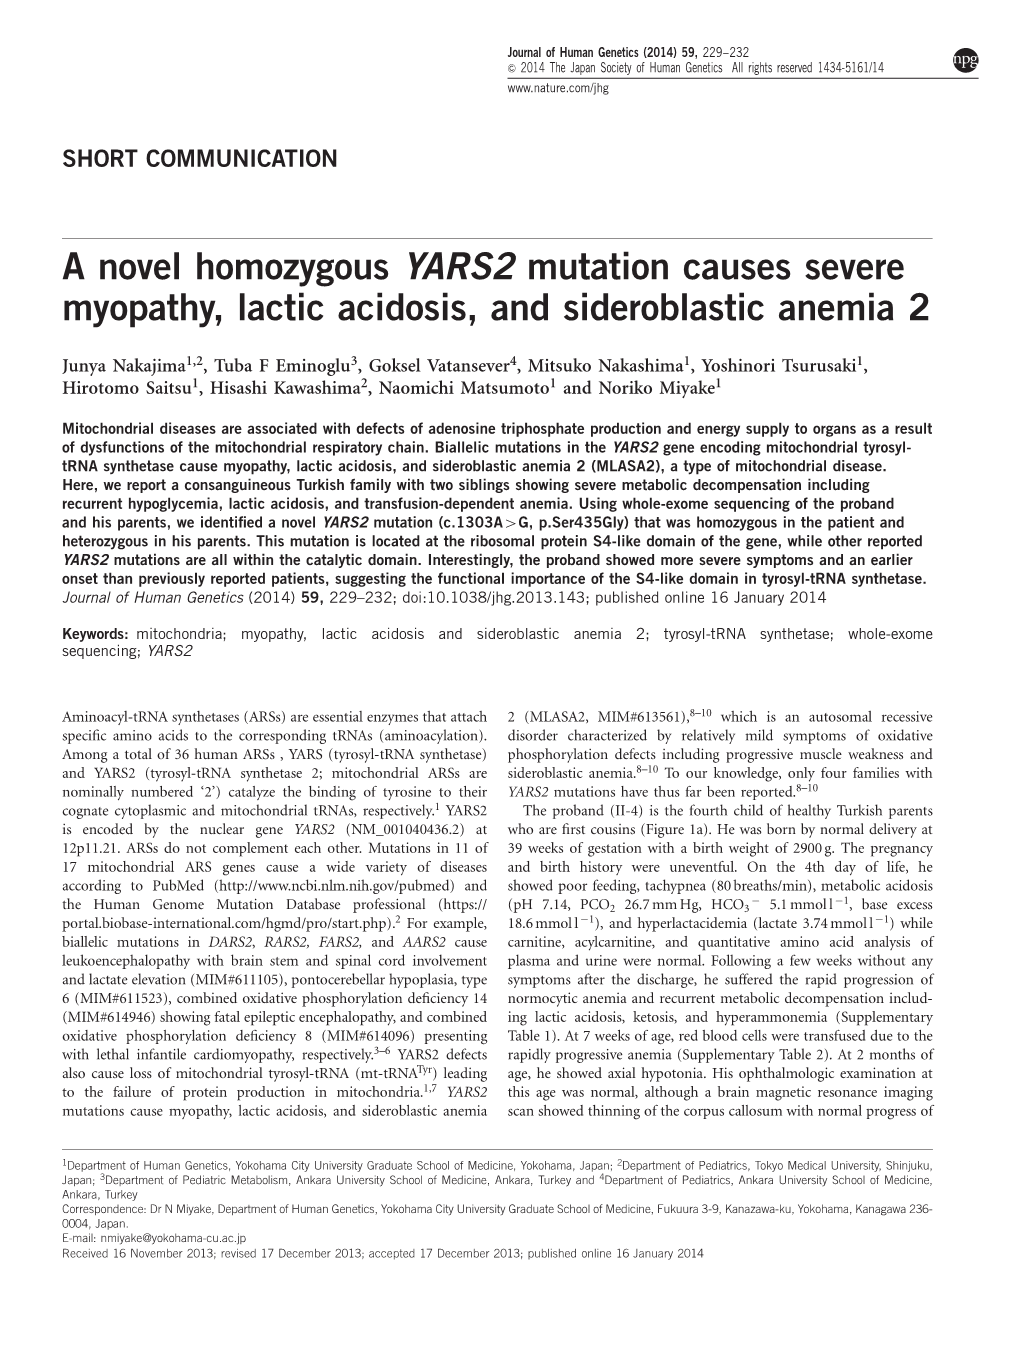 A Novel Homozygous YARS2 Mutation Causes Severe Myopathy, Lactic Acidosis, and Sideroblastic Anemia 2